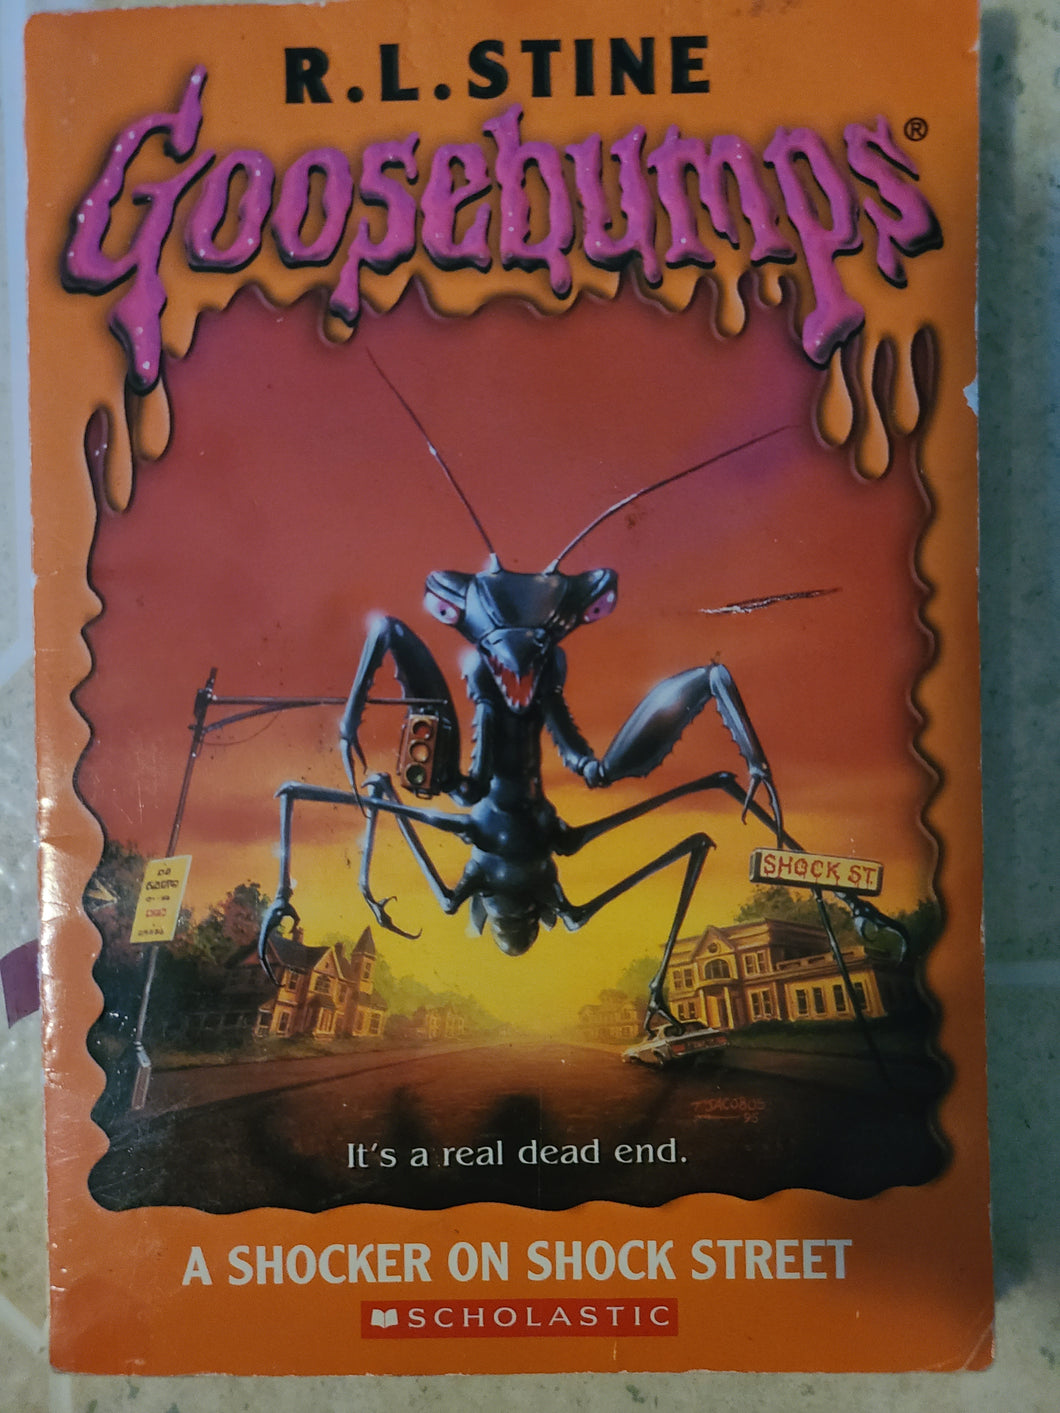 Goosebumps - A Shocker on Shock Street (1st Edition)